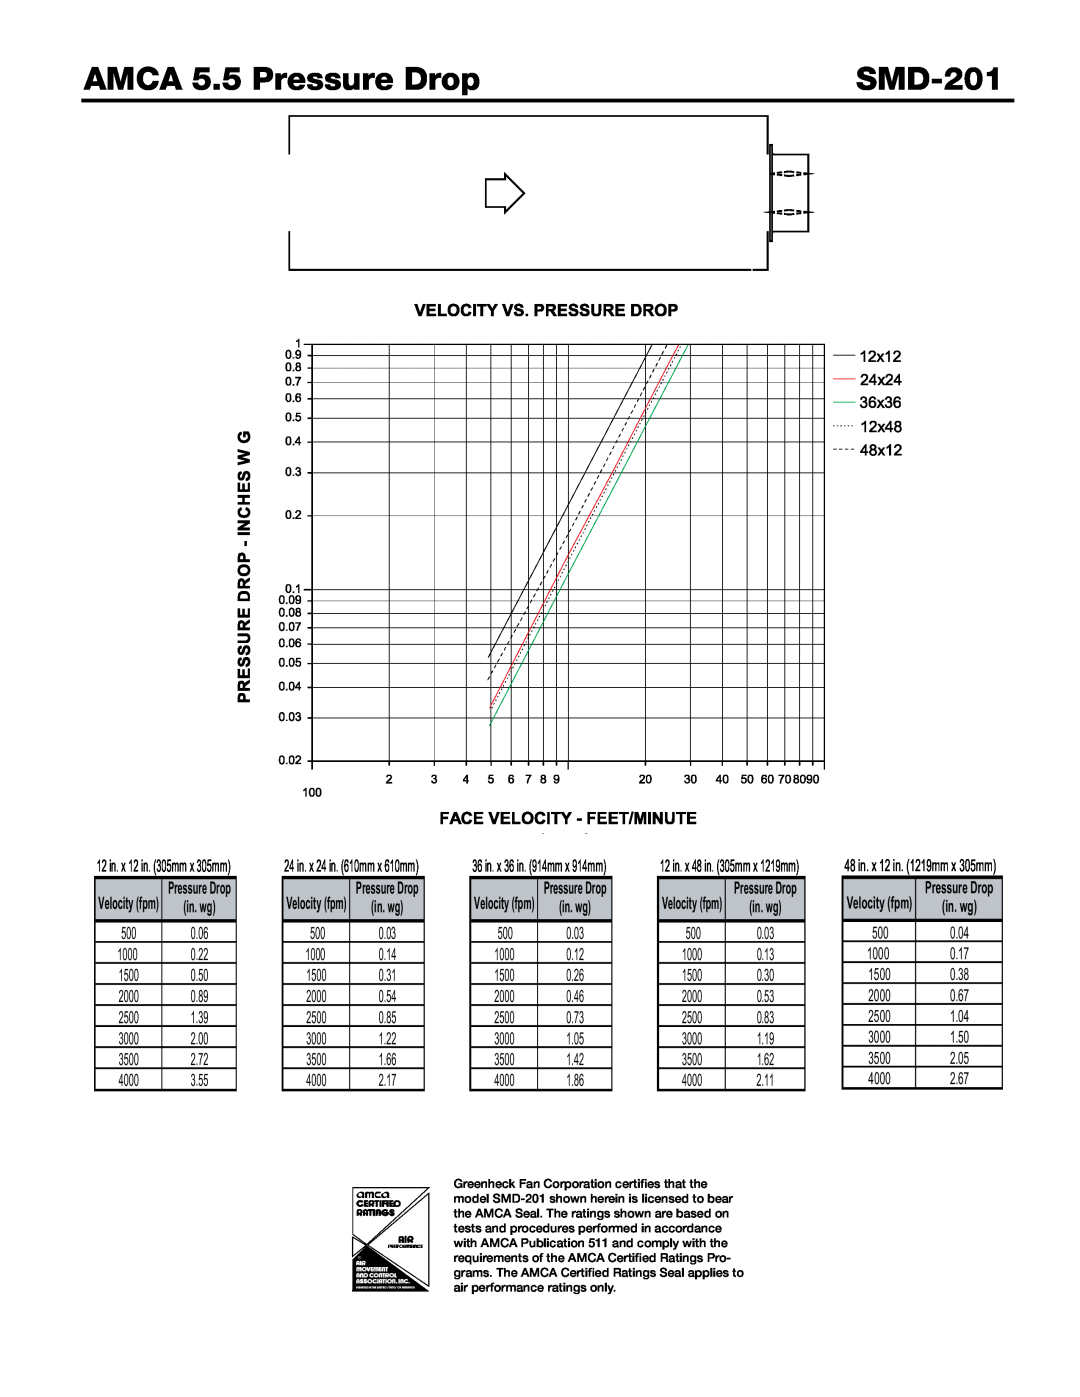 Greenheck Fan SMD-201 dimensions AMCA 5.5 Pressure Drop 